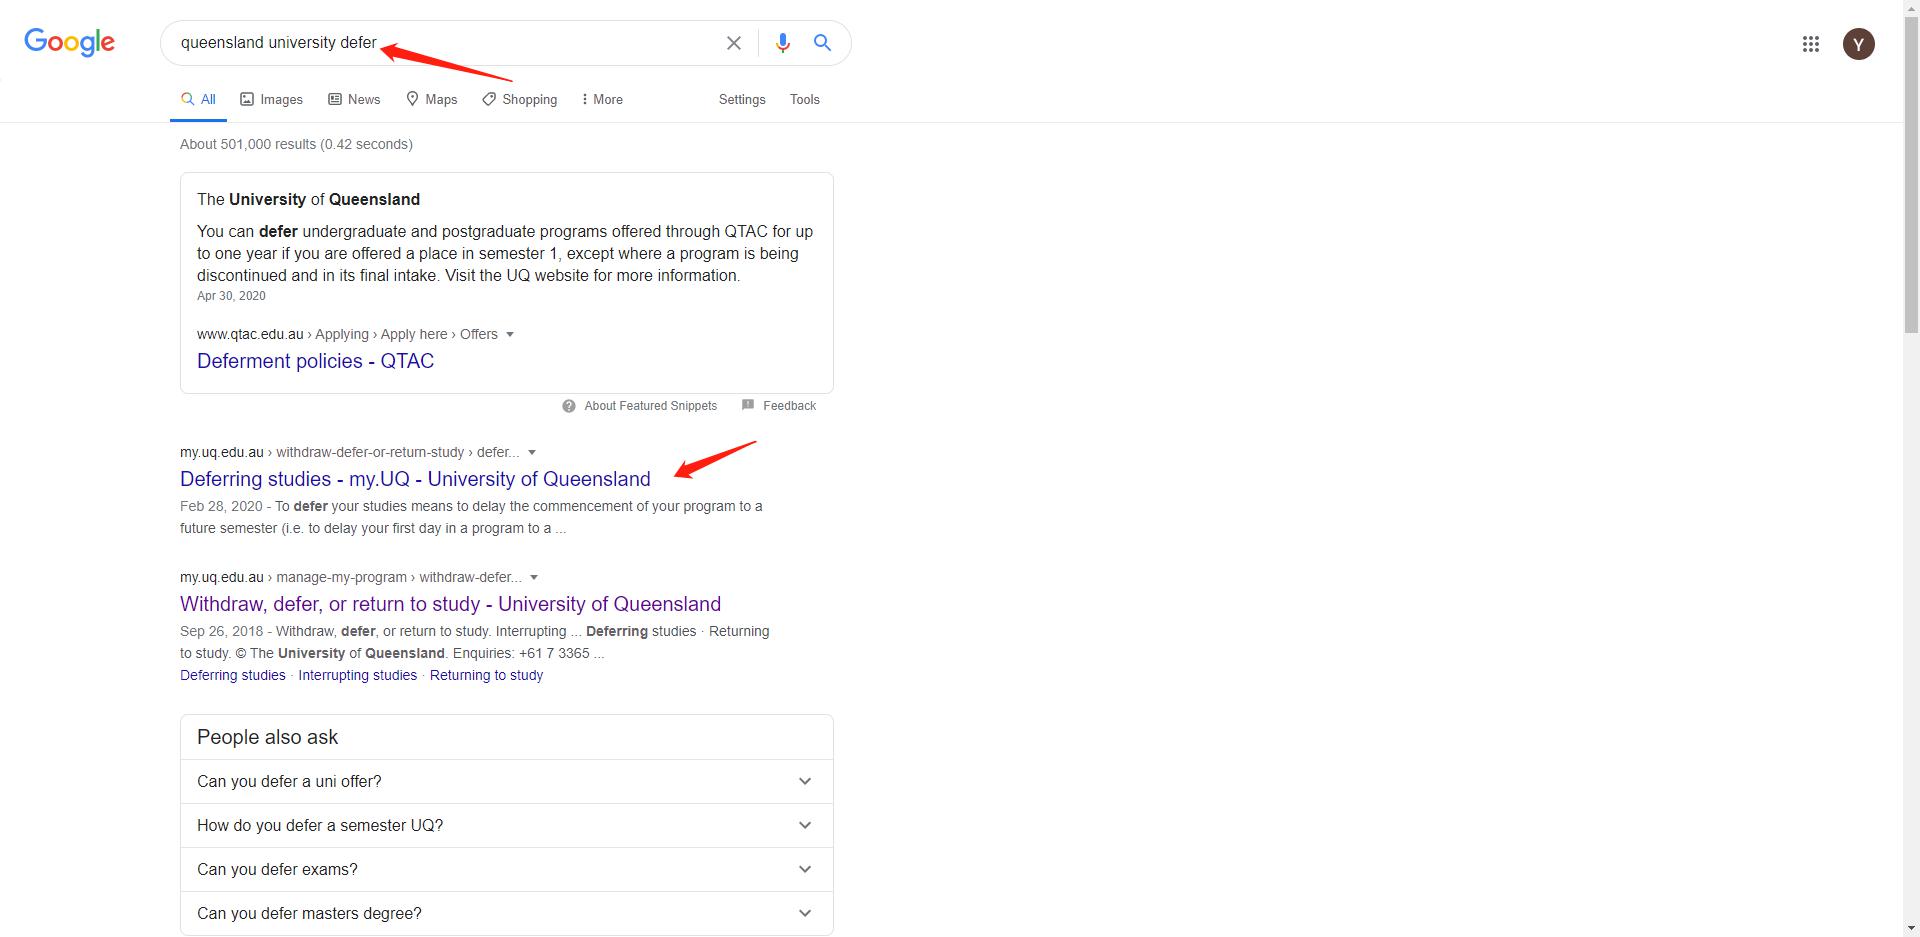 浏览器搜索queensland university defer，点击第二个结果。